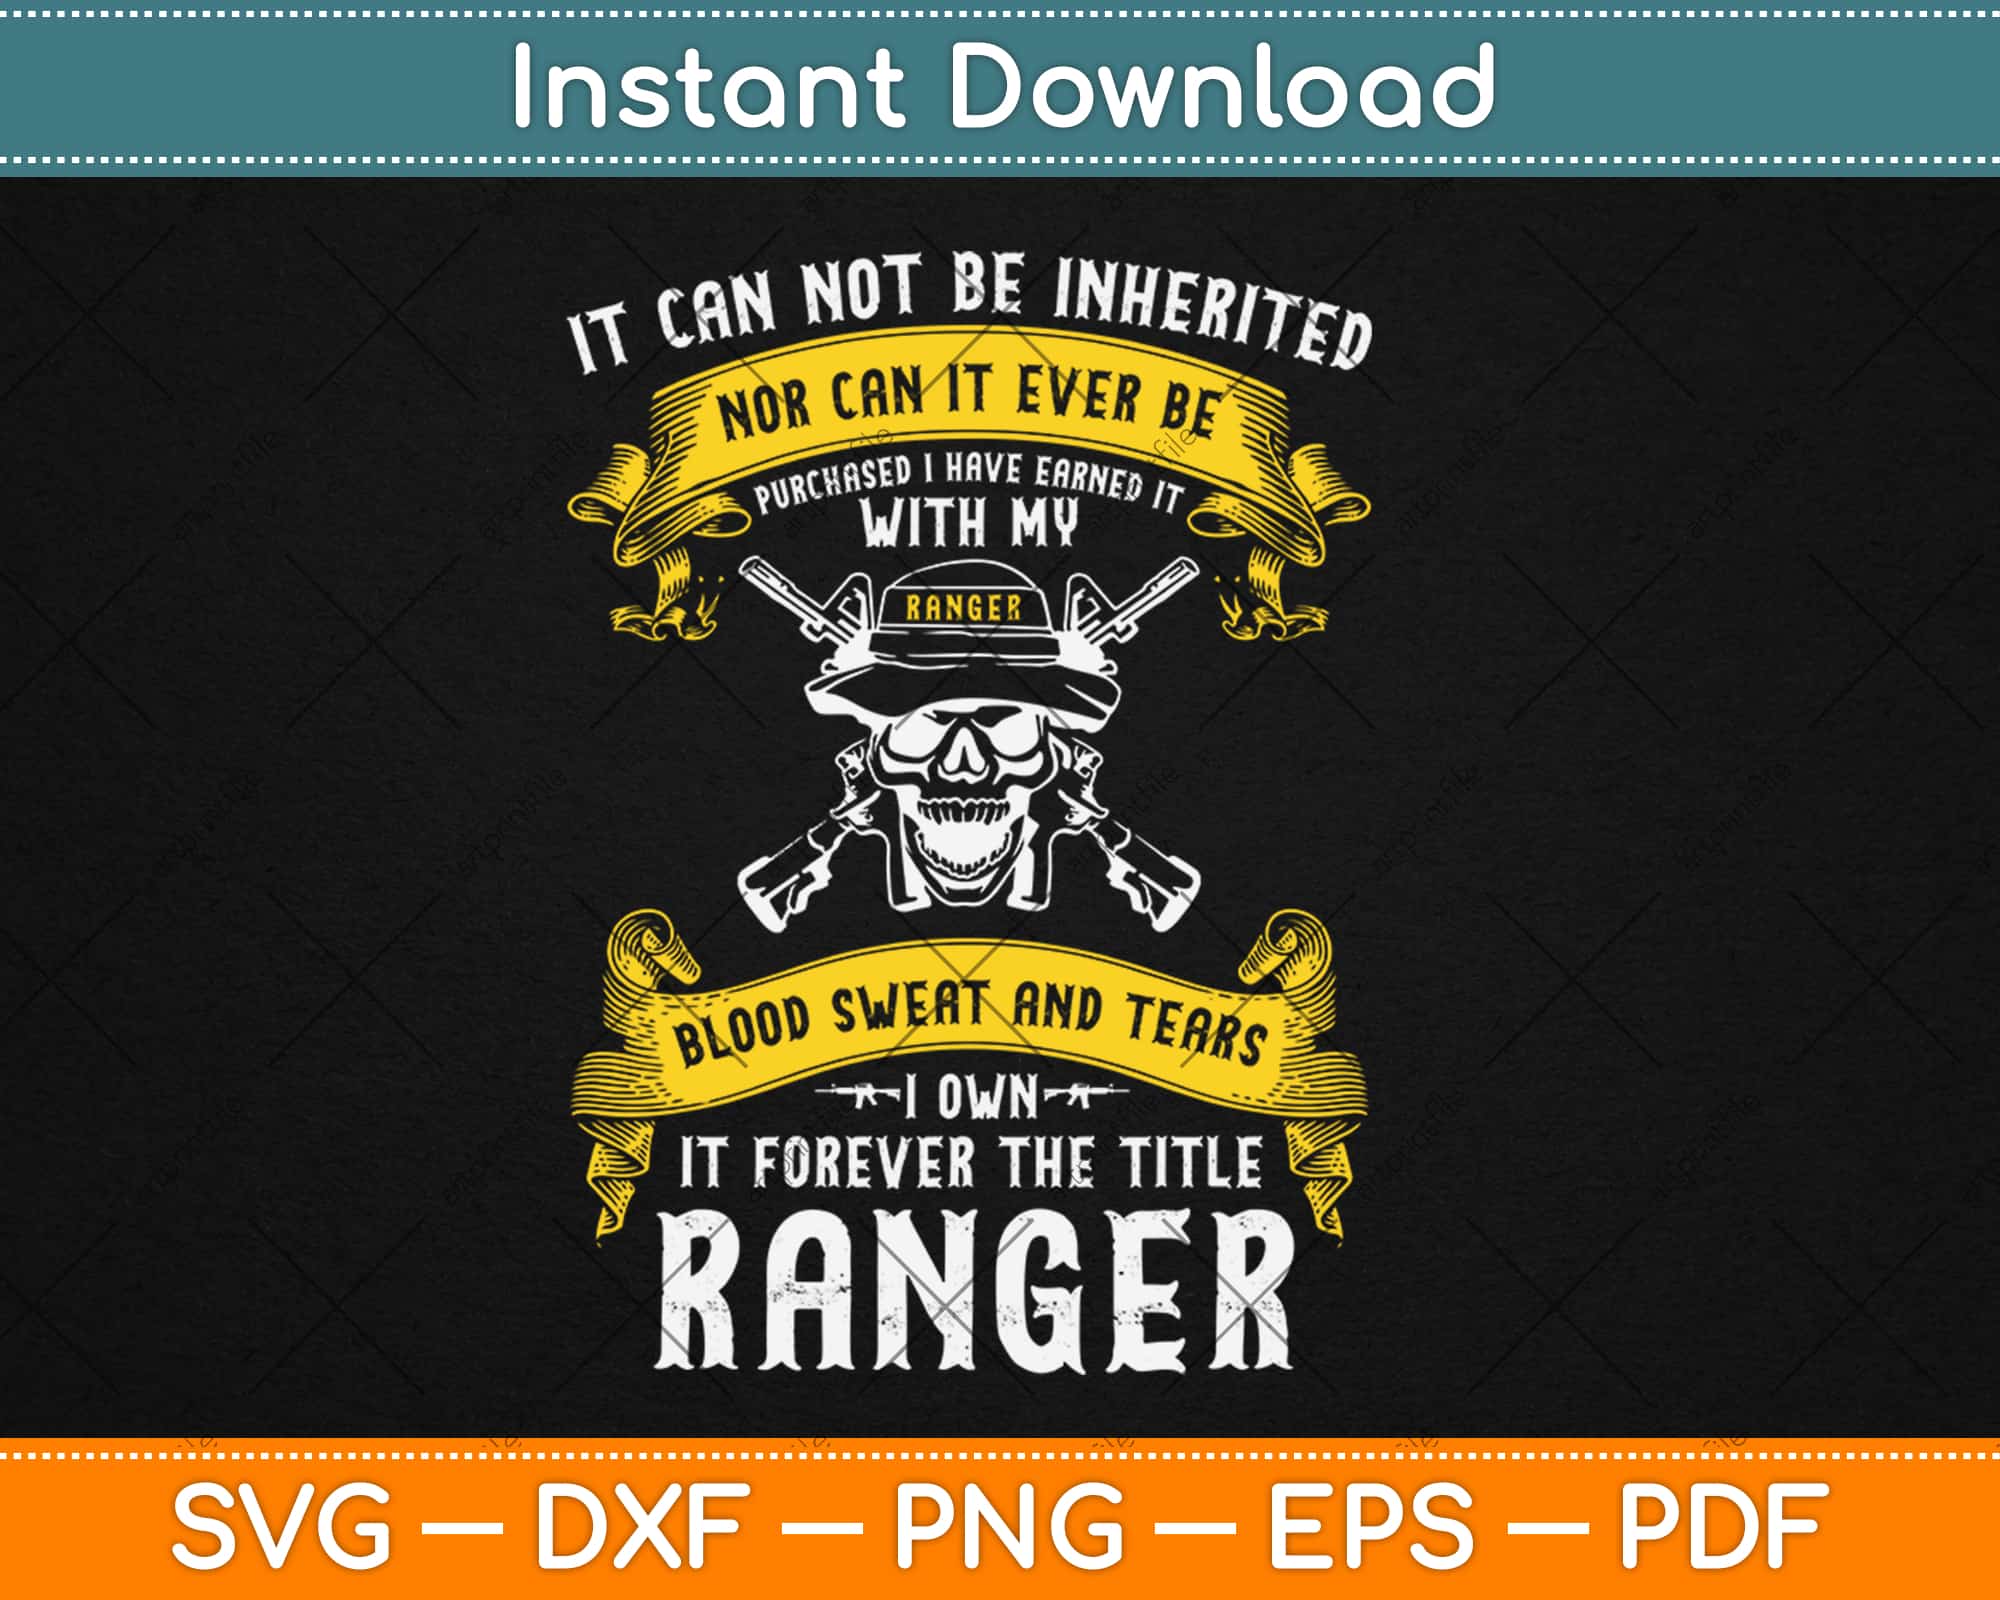 I Own It Forever The Title Us Army Ranger Veteran Svg Png Design Digital Craft Cut File Artprintfile